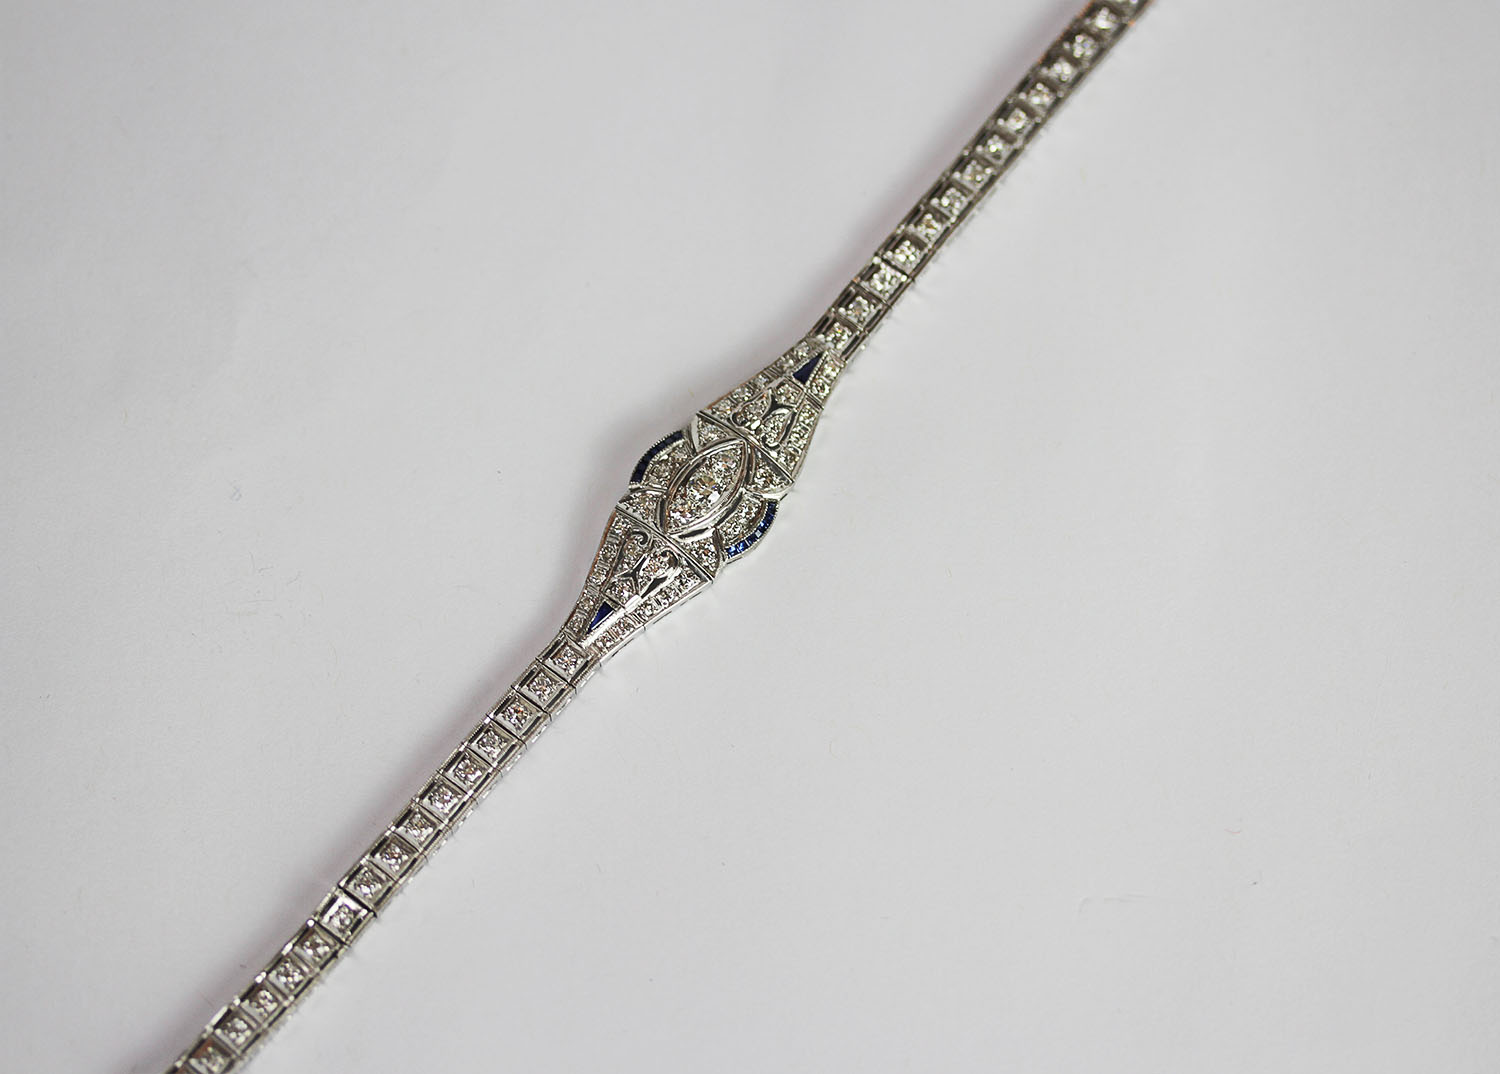 Sapphire and Diamond bracelet, set with 14 baguette cut sapphires and 2 trillion cut sapphires, - Image 3 of 5